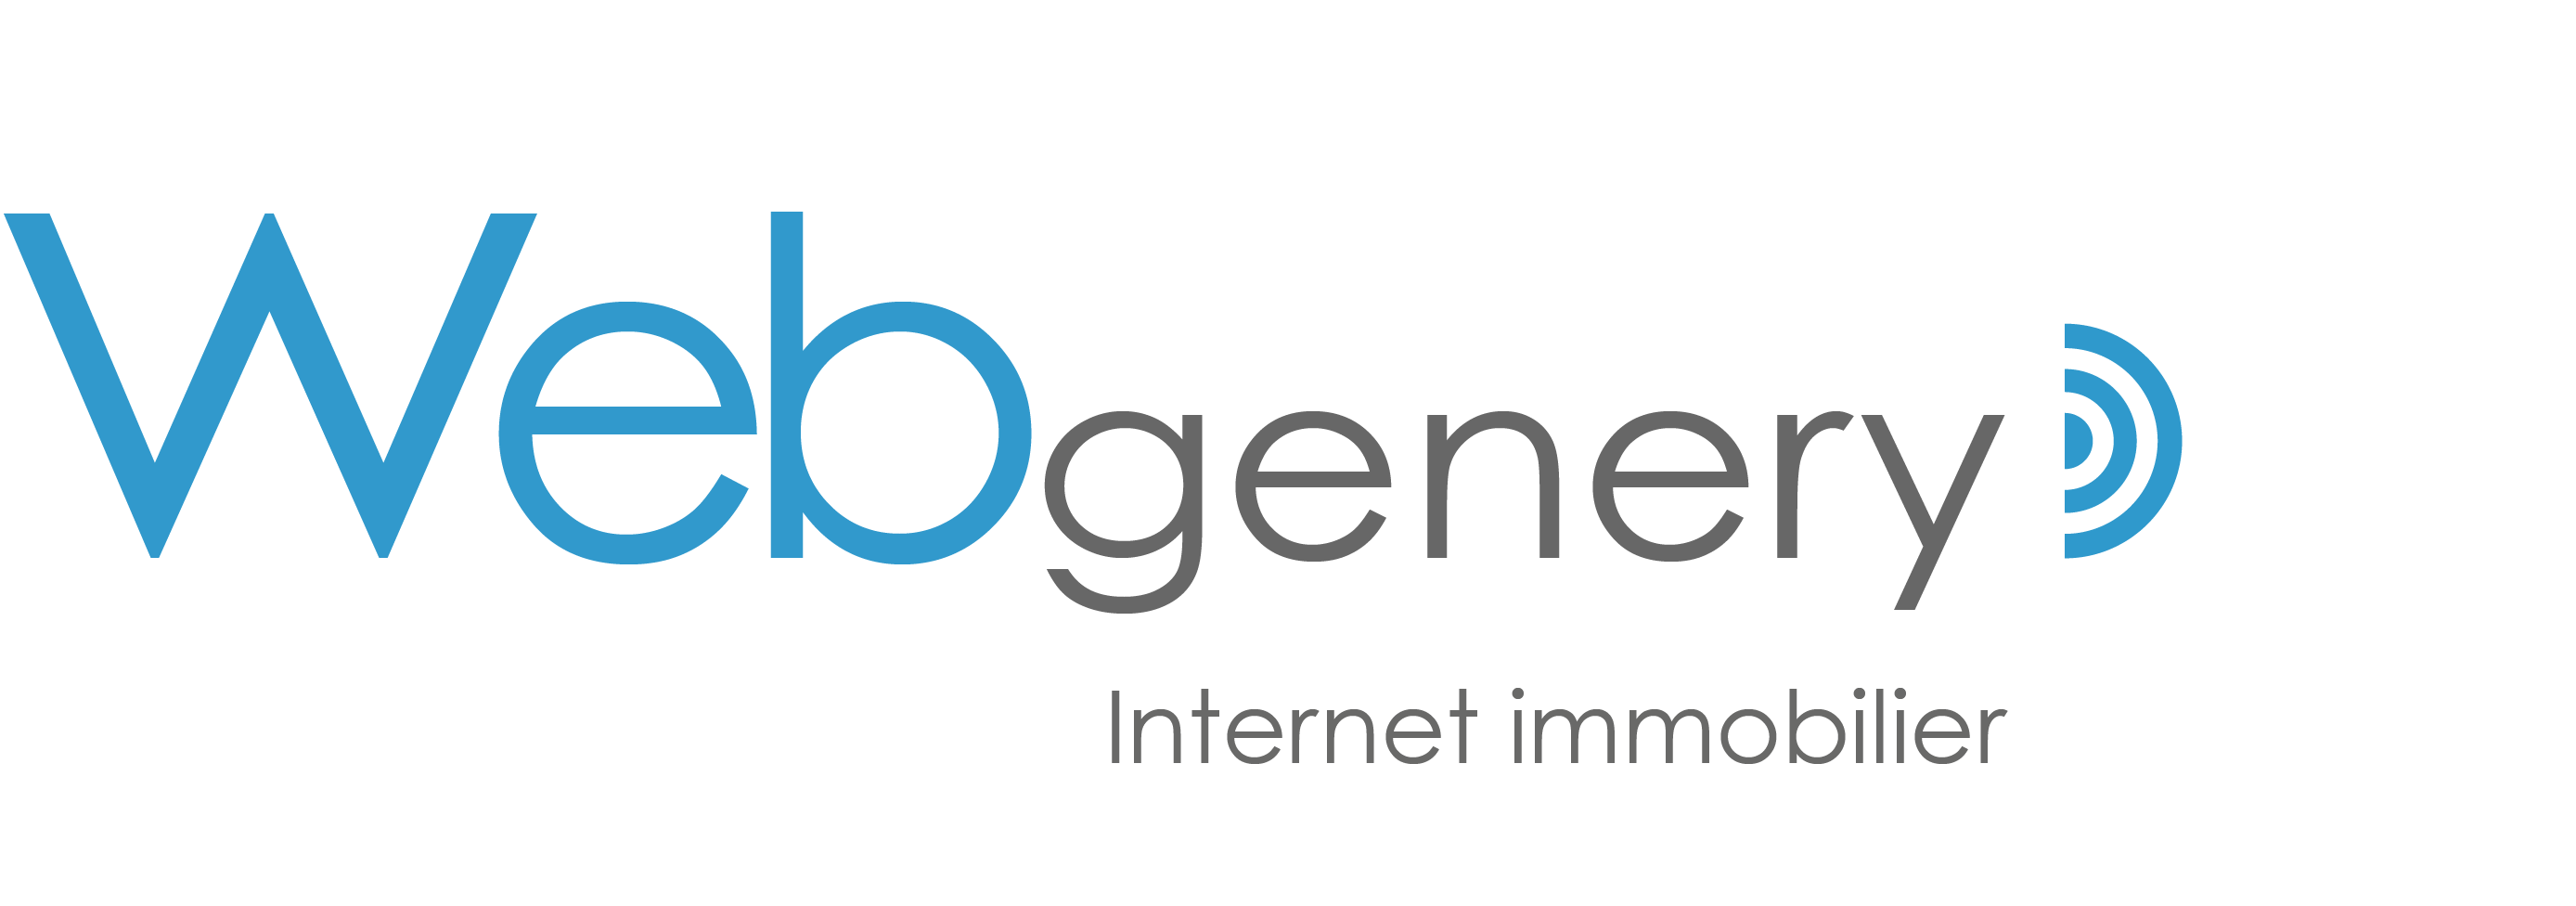 Logo Webgenery